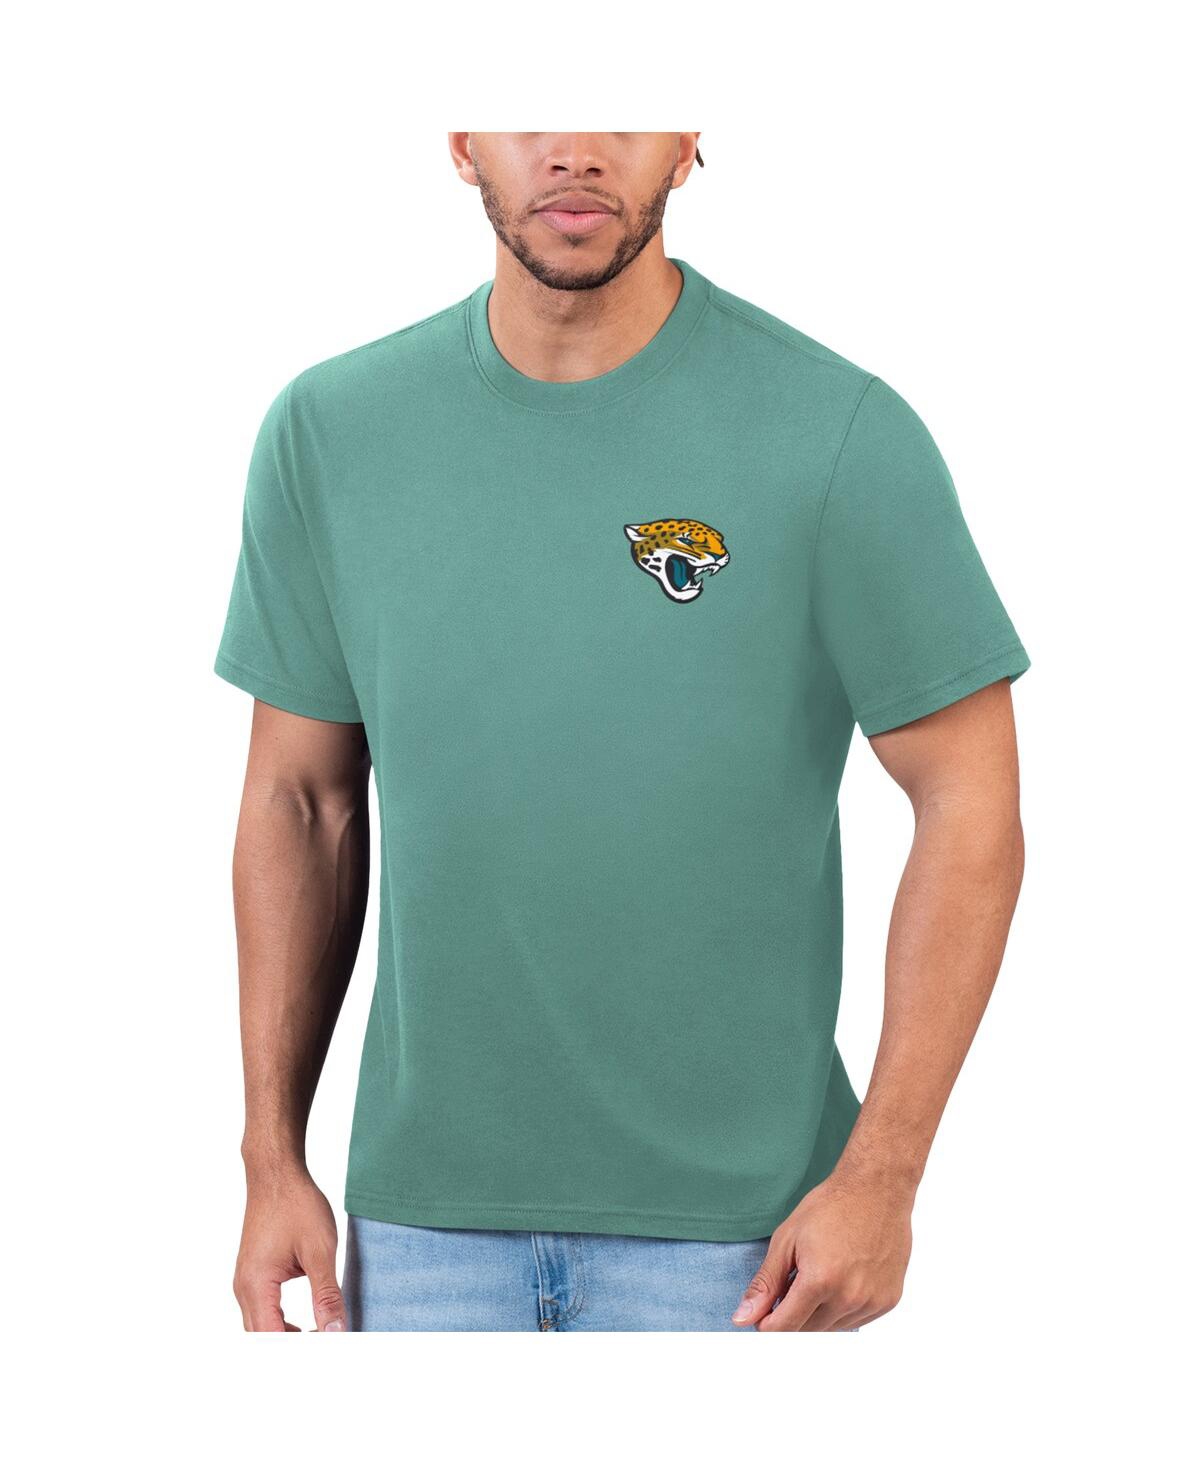 Margaritaville Mint Jacksonville Jaguars T-shirt